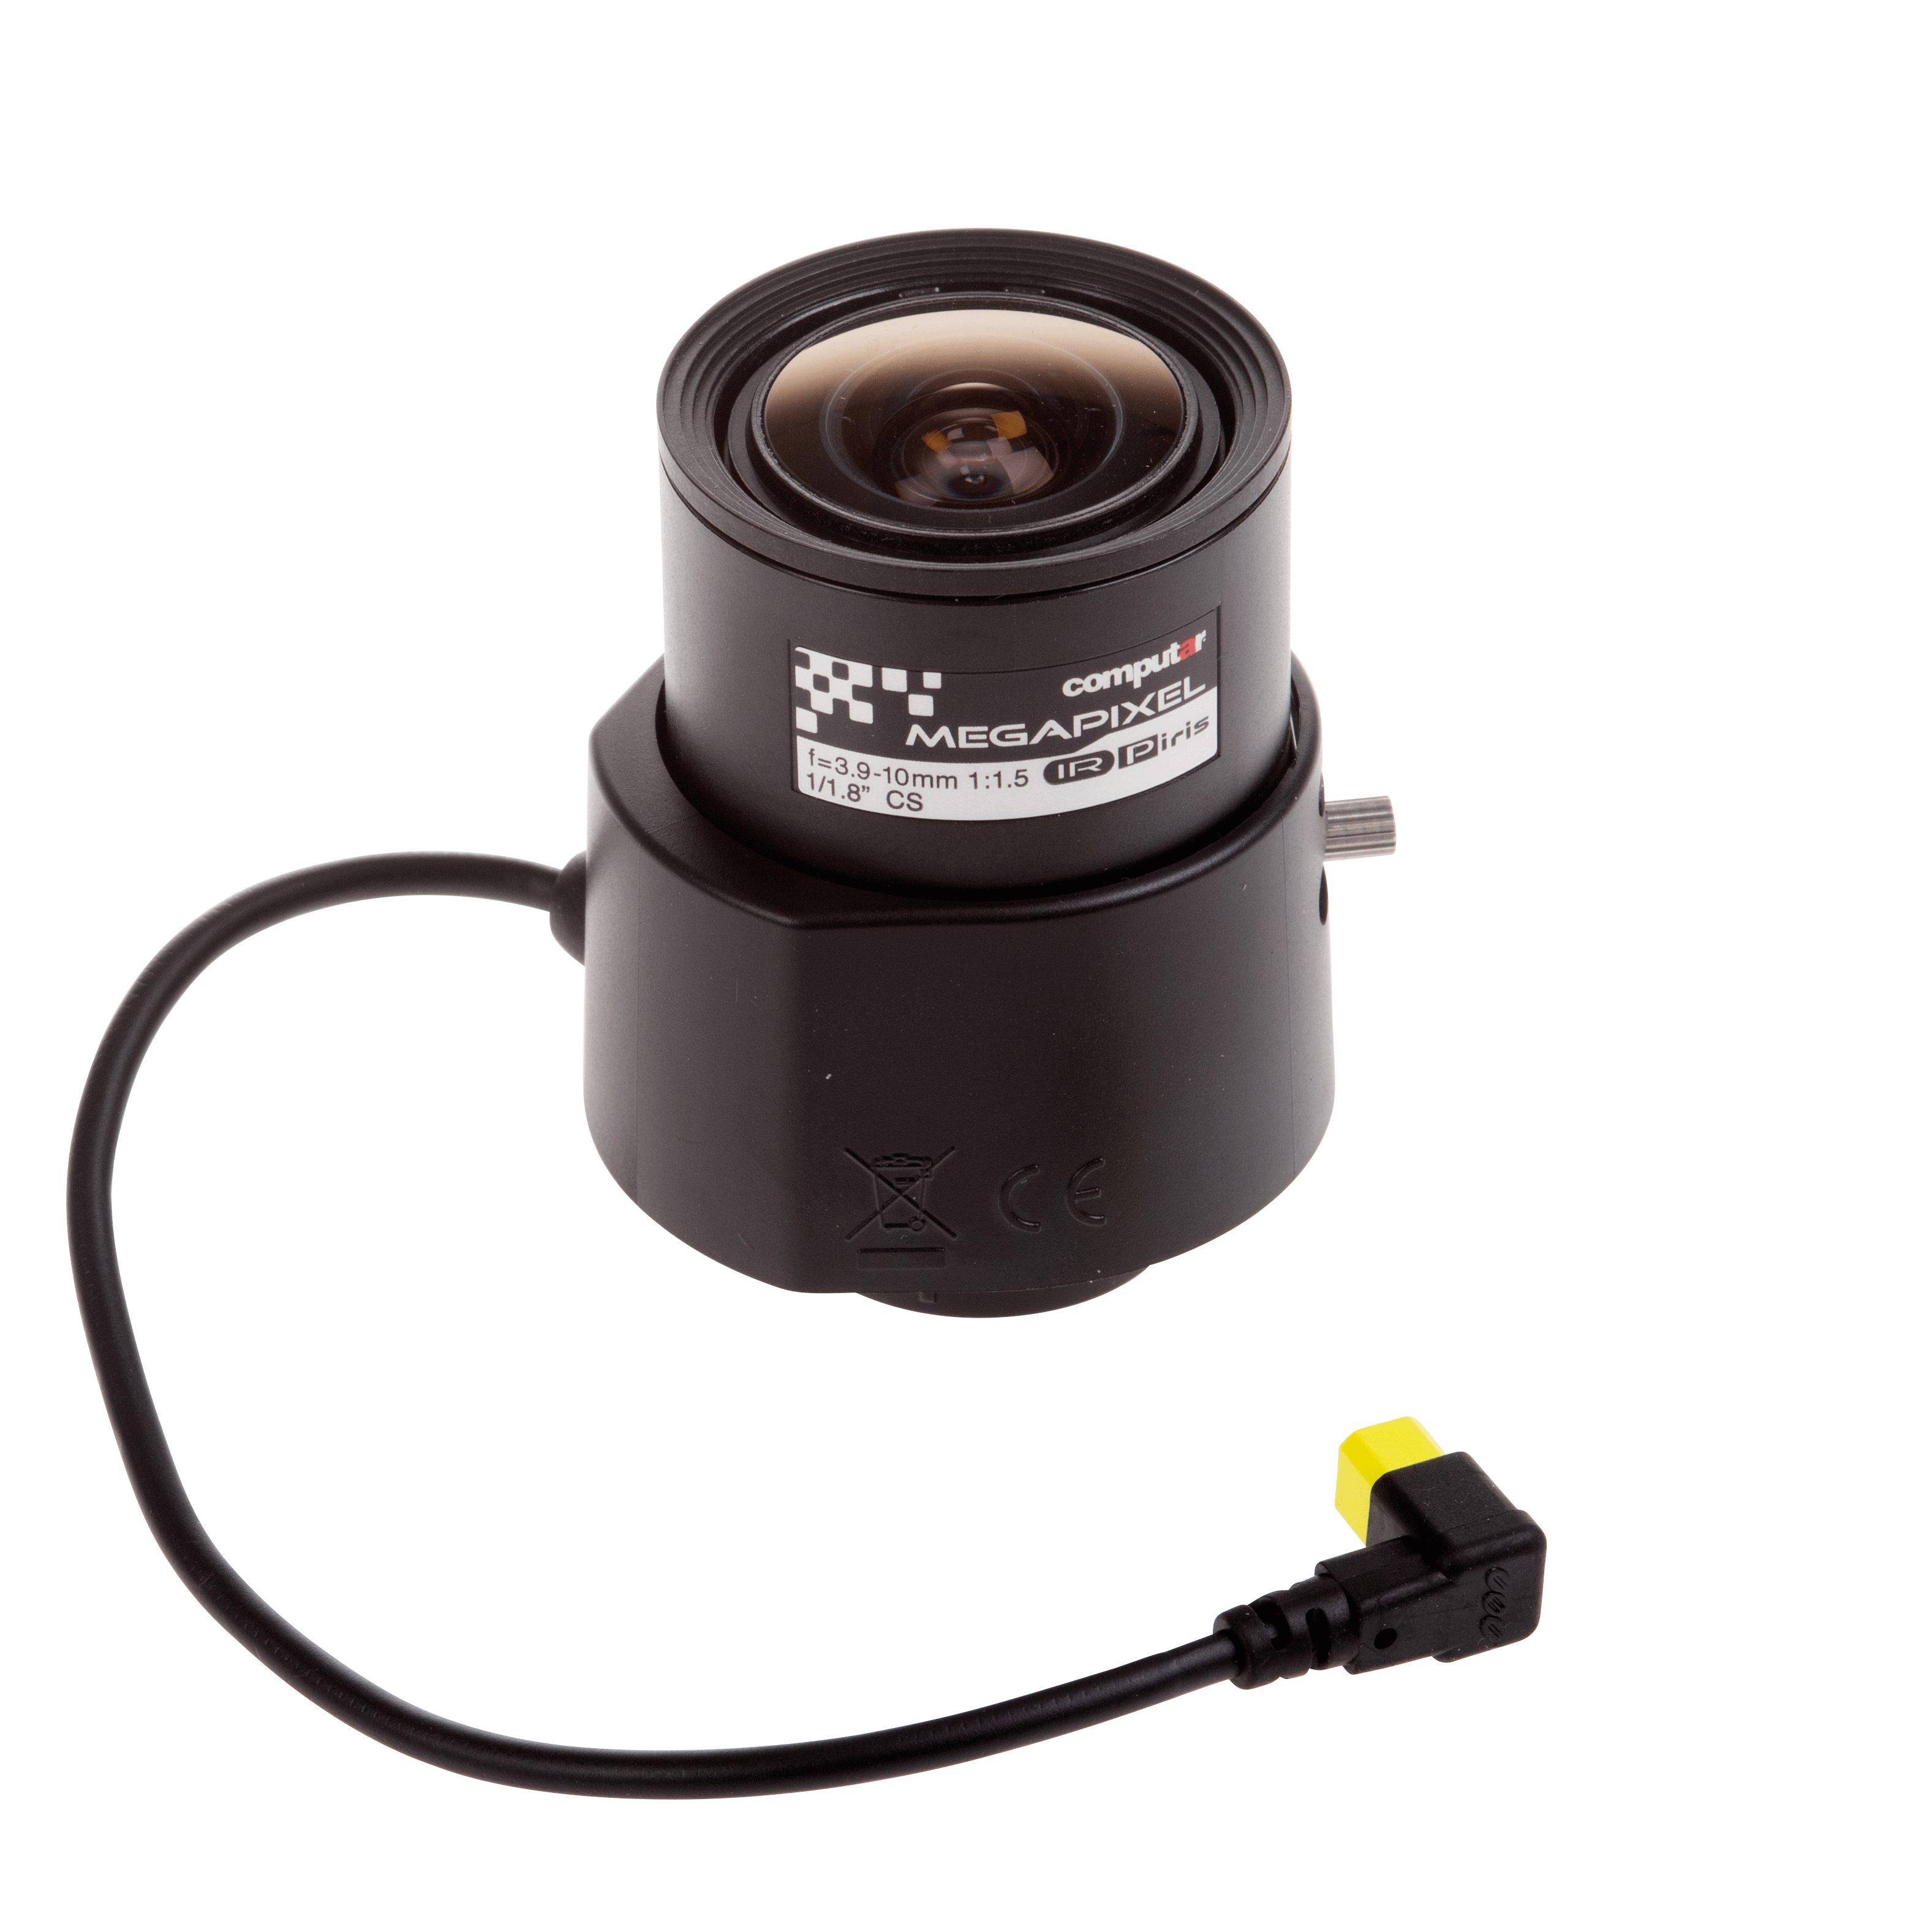 Extremisten Disciplinair menigte Lens CS 3.9-10 mm F1.5 P-Iris 8 MP | Axis Communications